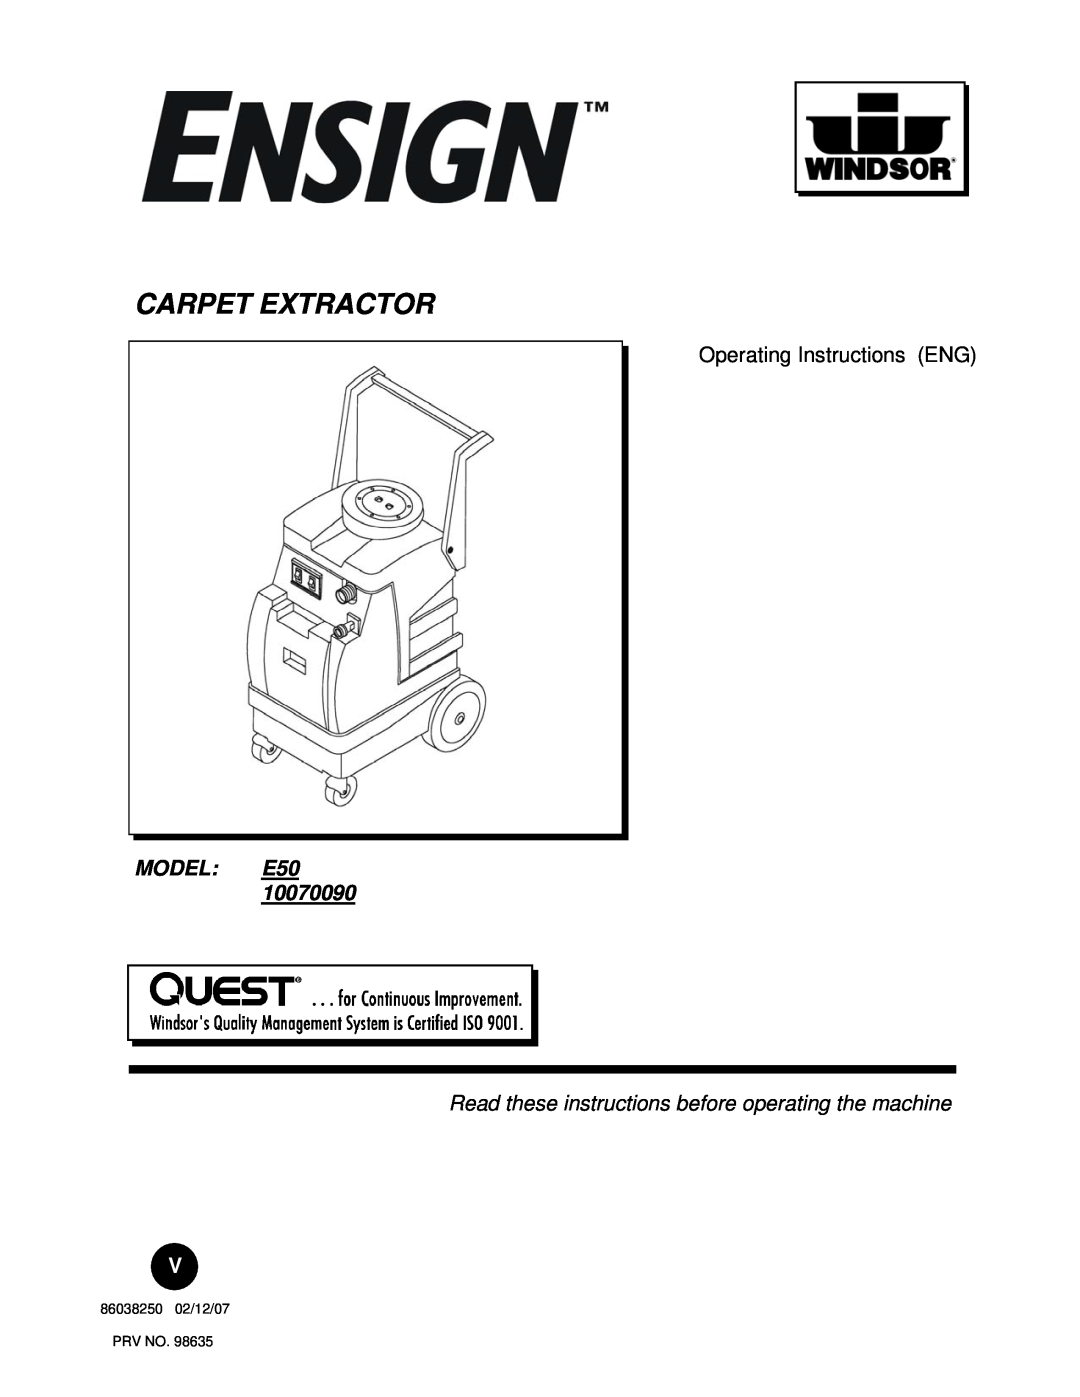 Windsor E50 10070090 operating instructions Carpet Extractor, Operating Instructions ENG, MODEL E50 